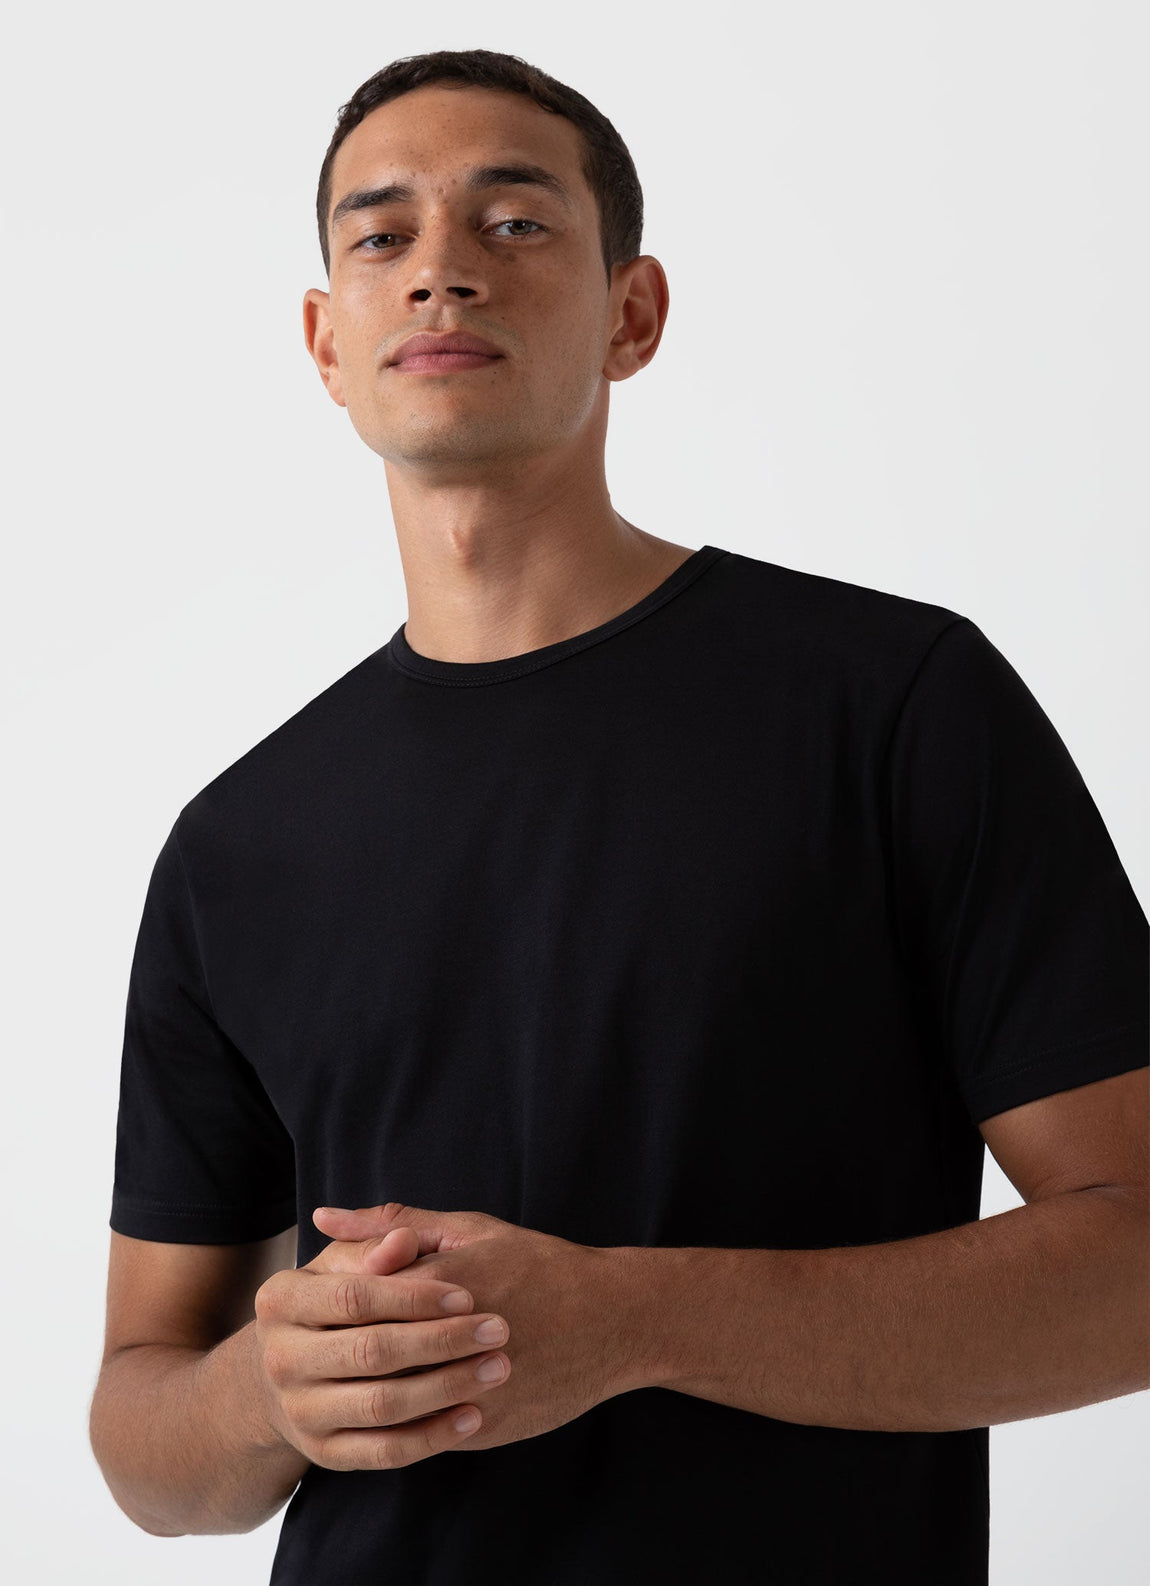 Vintage Unisex Black T Shirt Men T- Shirt Cotton Tee Shirt